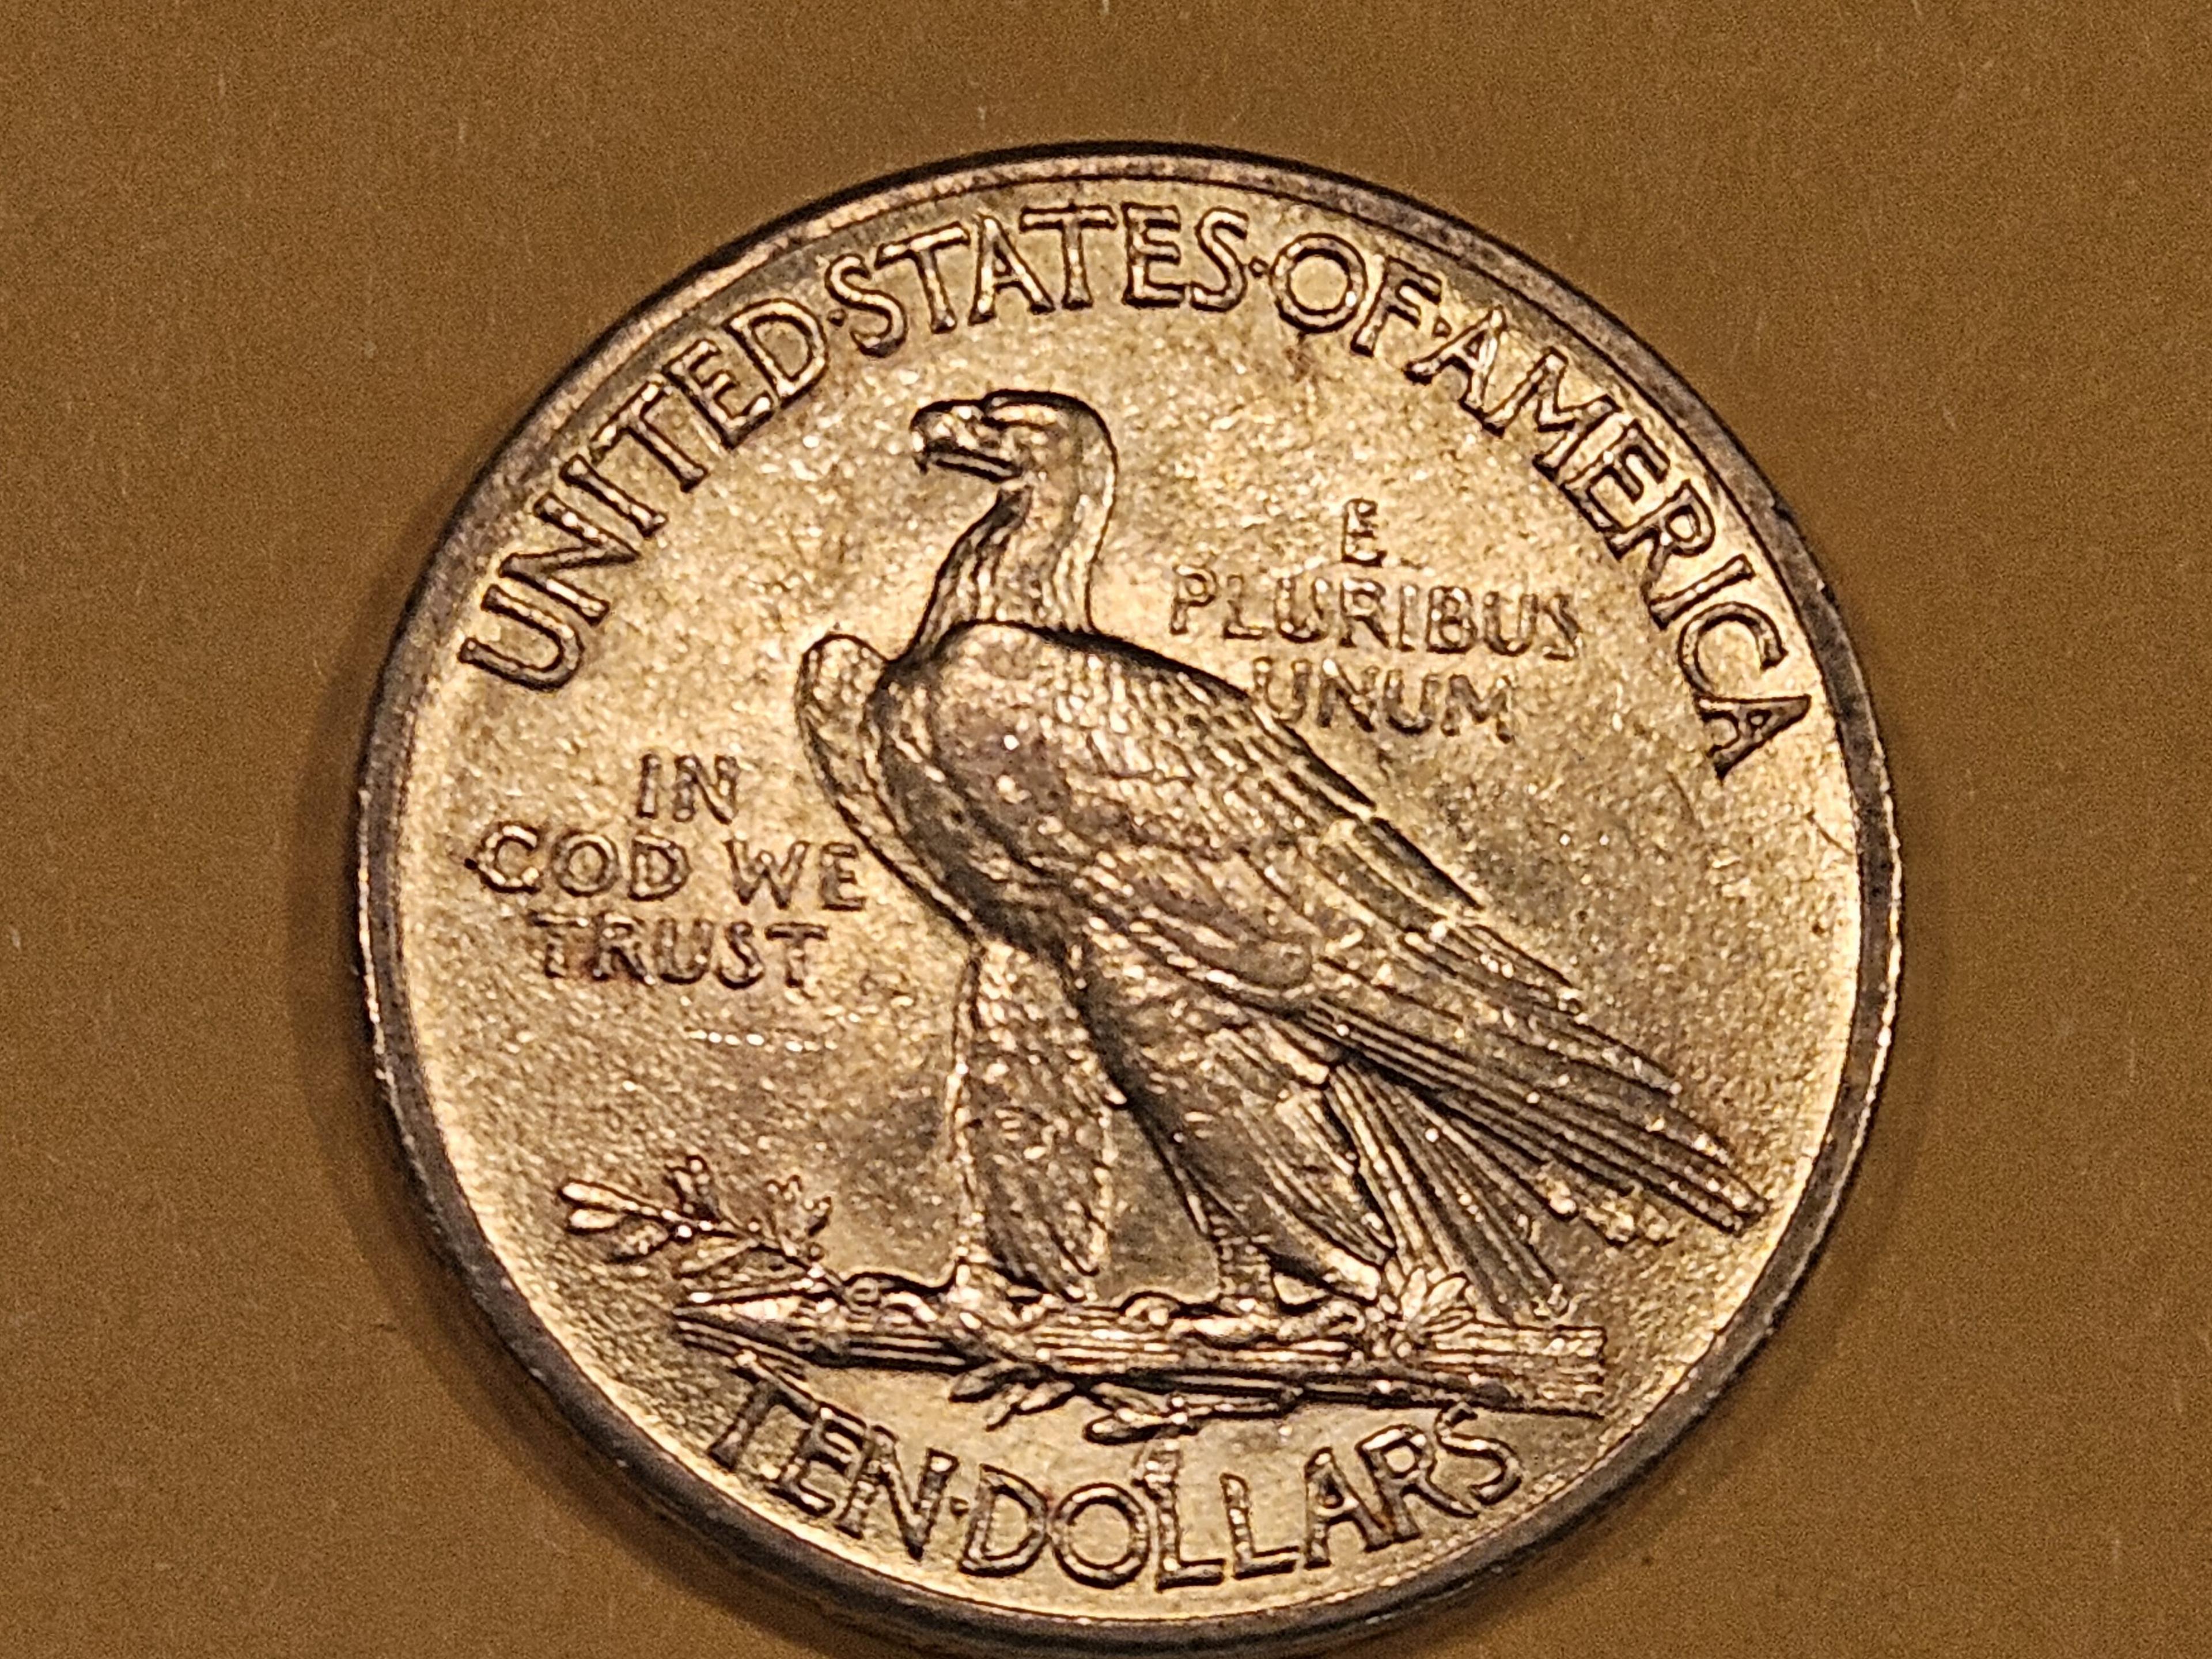 GOLD! Choice Brilliant Uncirculated 1915 GOLD Indian Ten Dollars